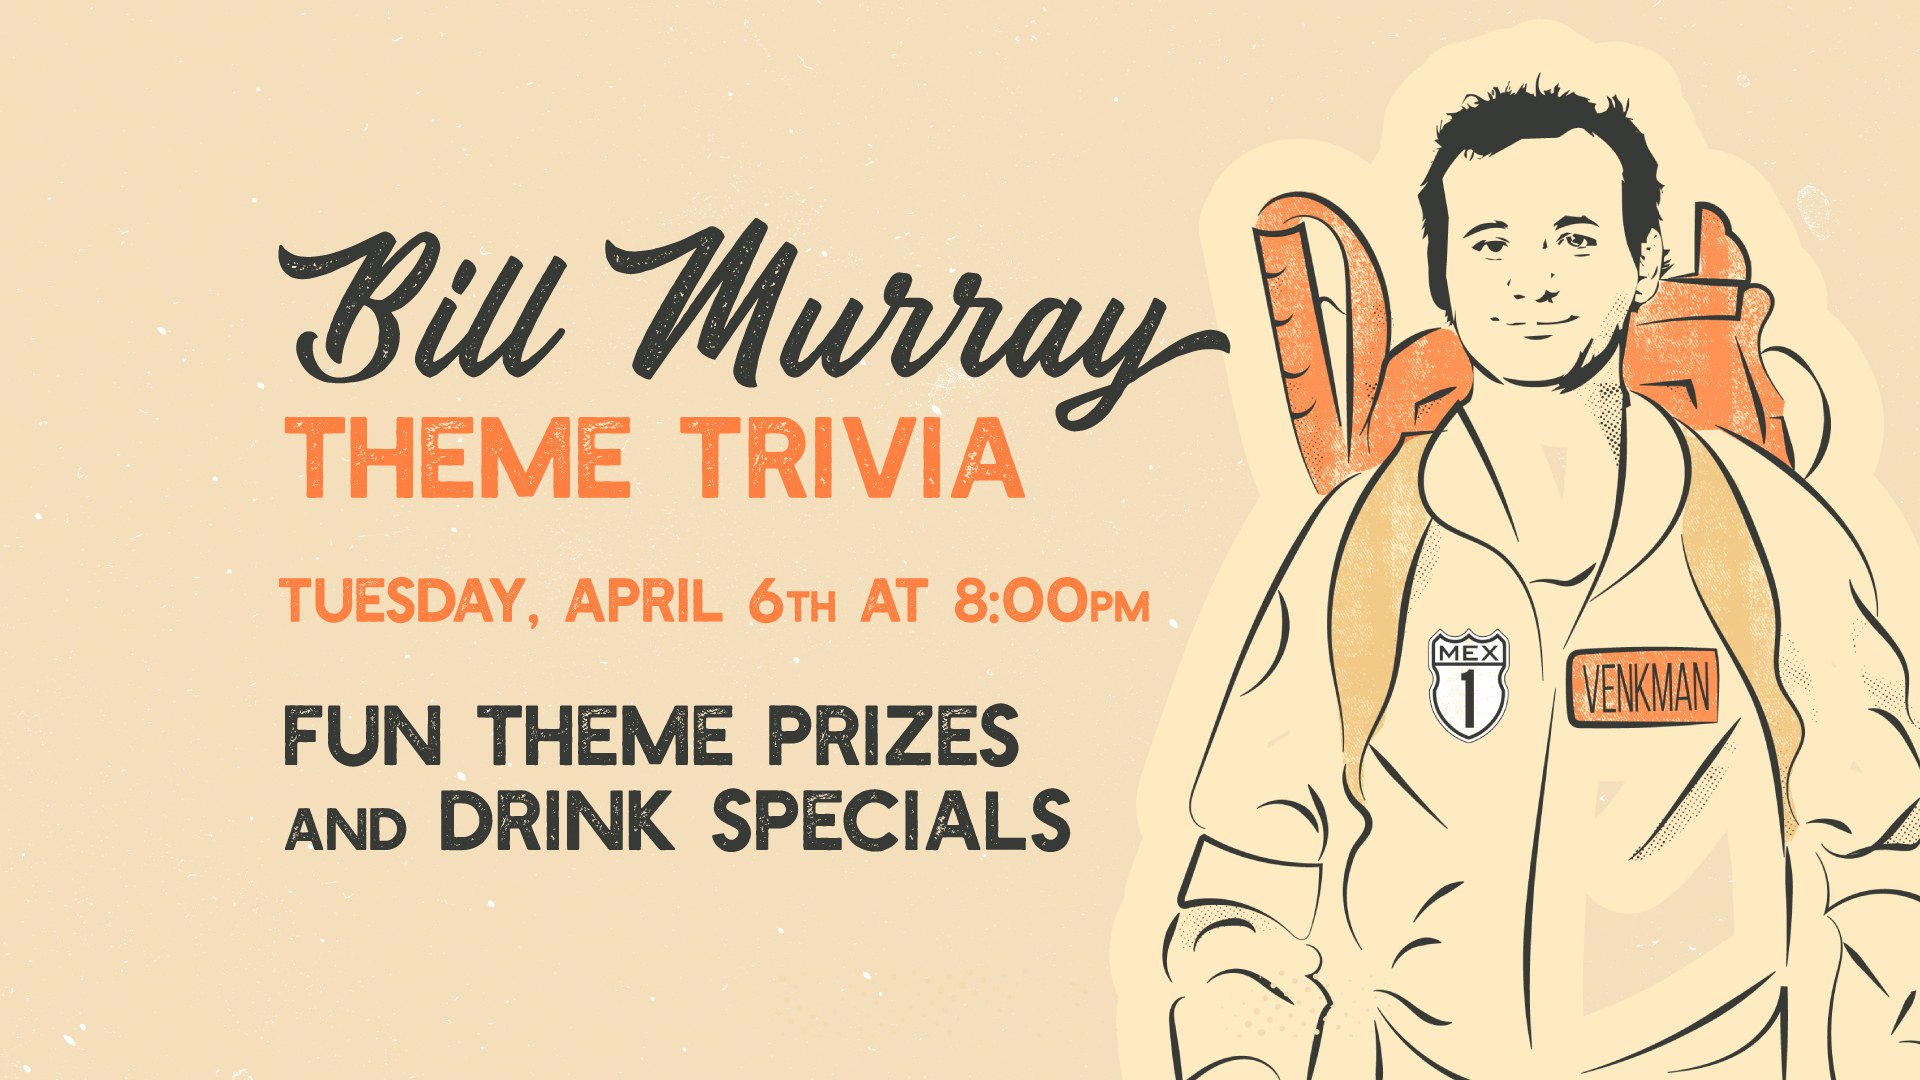 Bill Murray Theme Trivia at Mex 1 West Ashley Tuesday, April 6th at 8pm